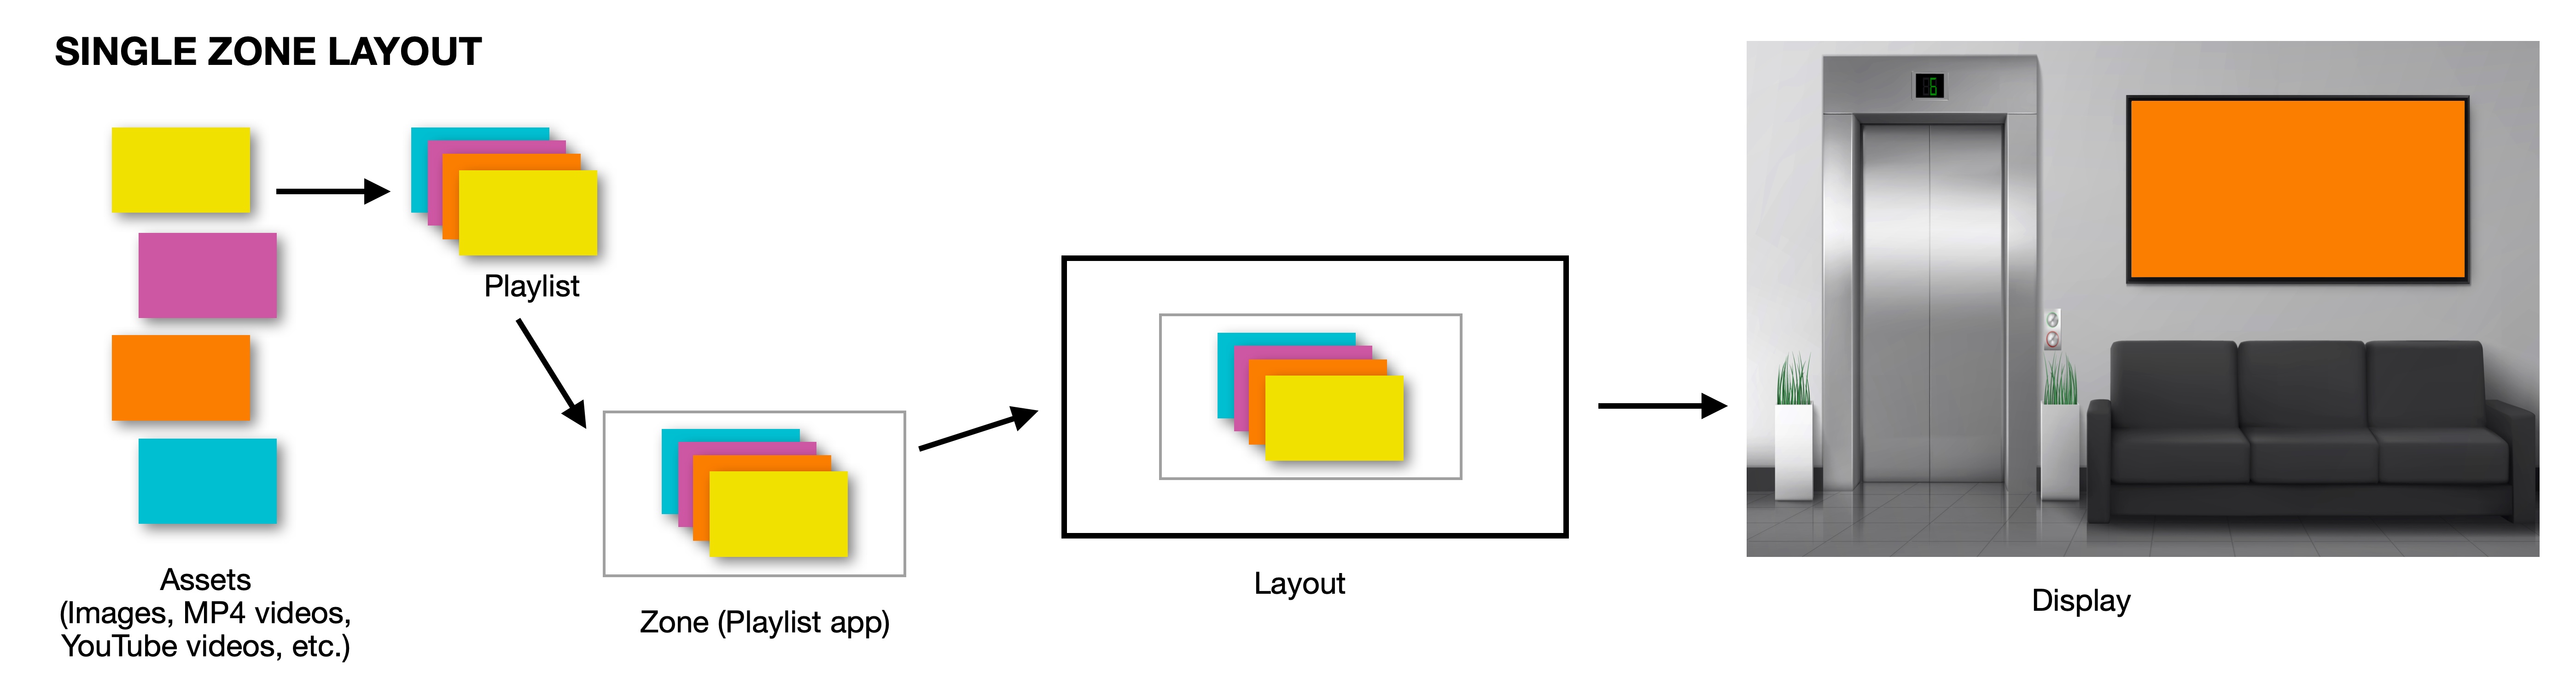 Single-Zone-Layout-Diagram-2.jpg